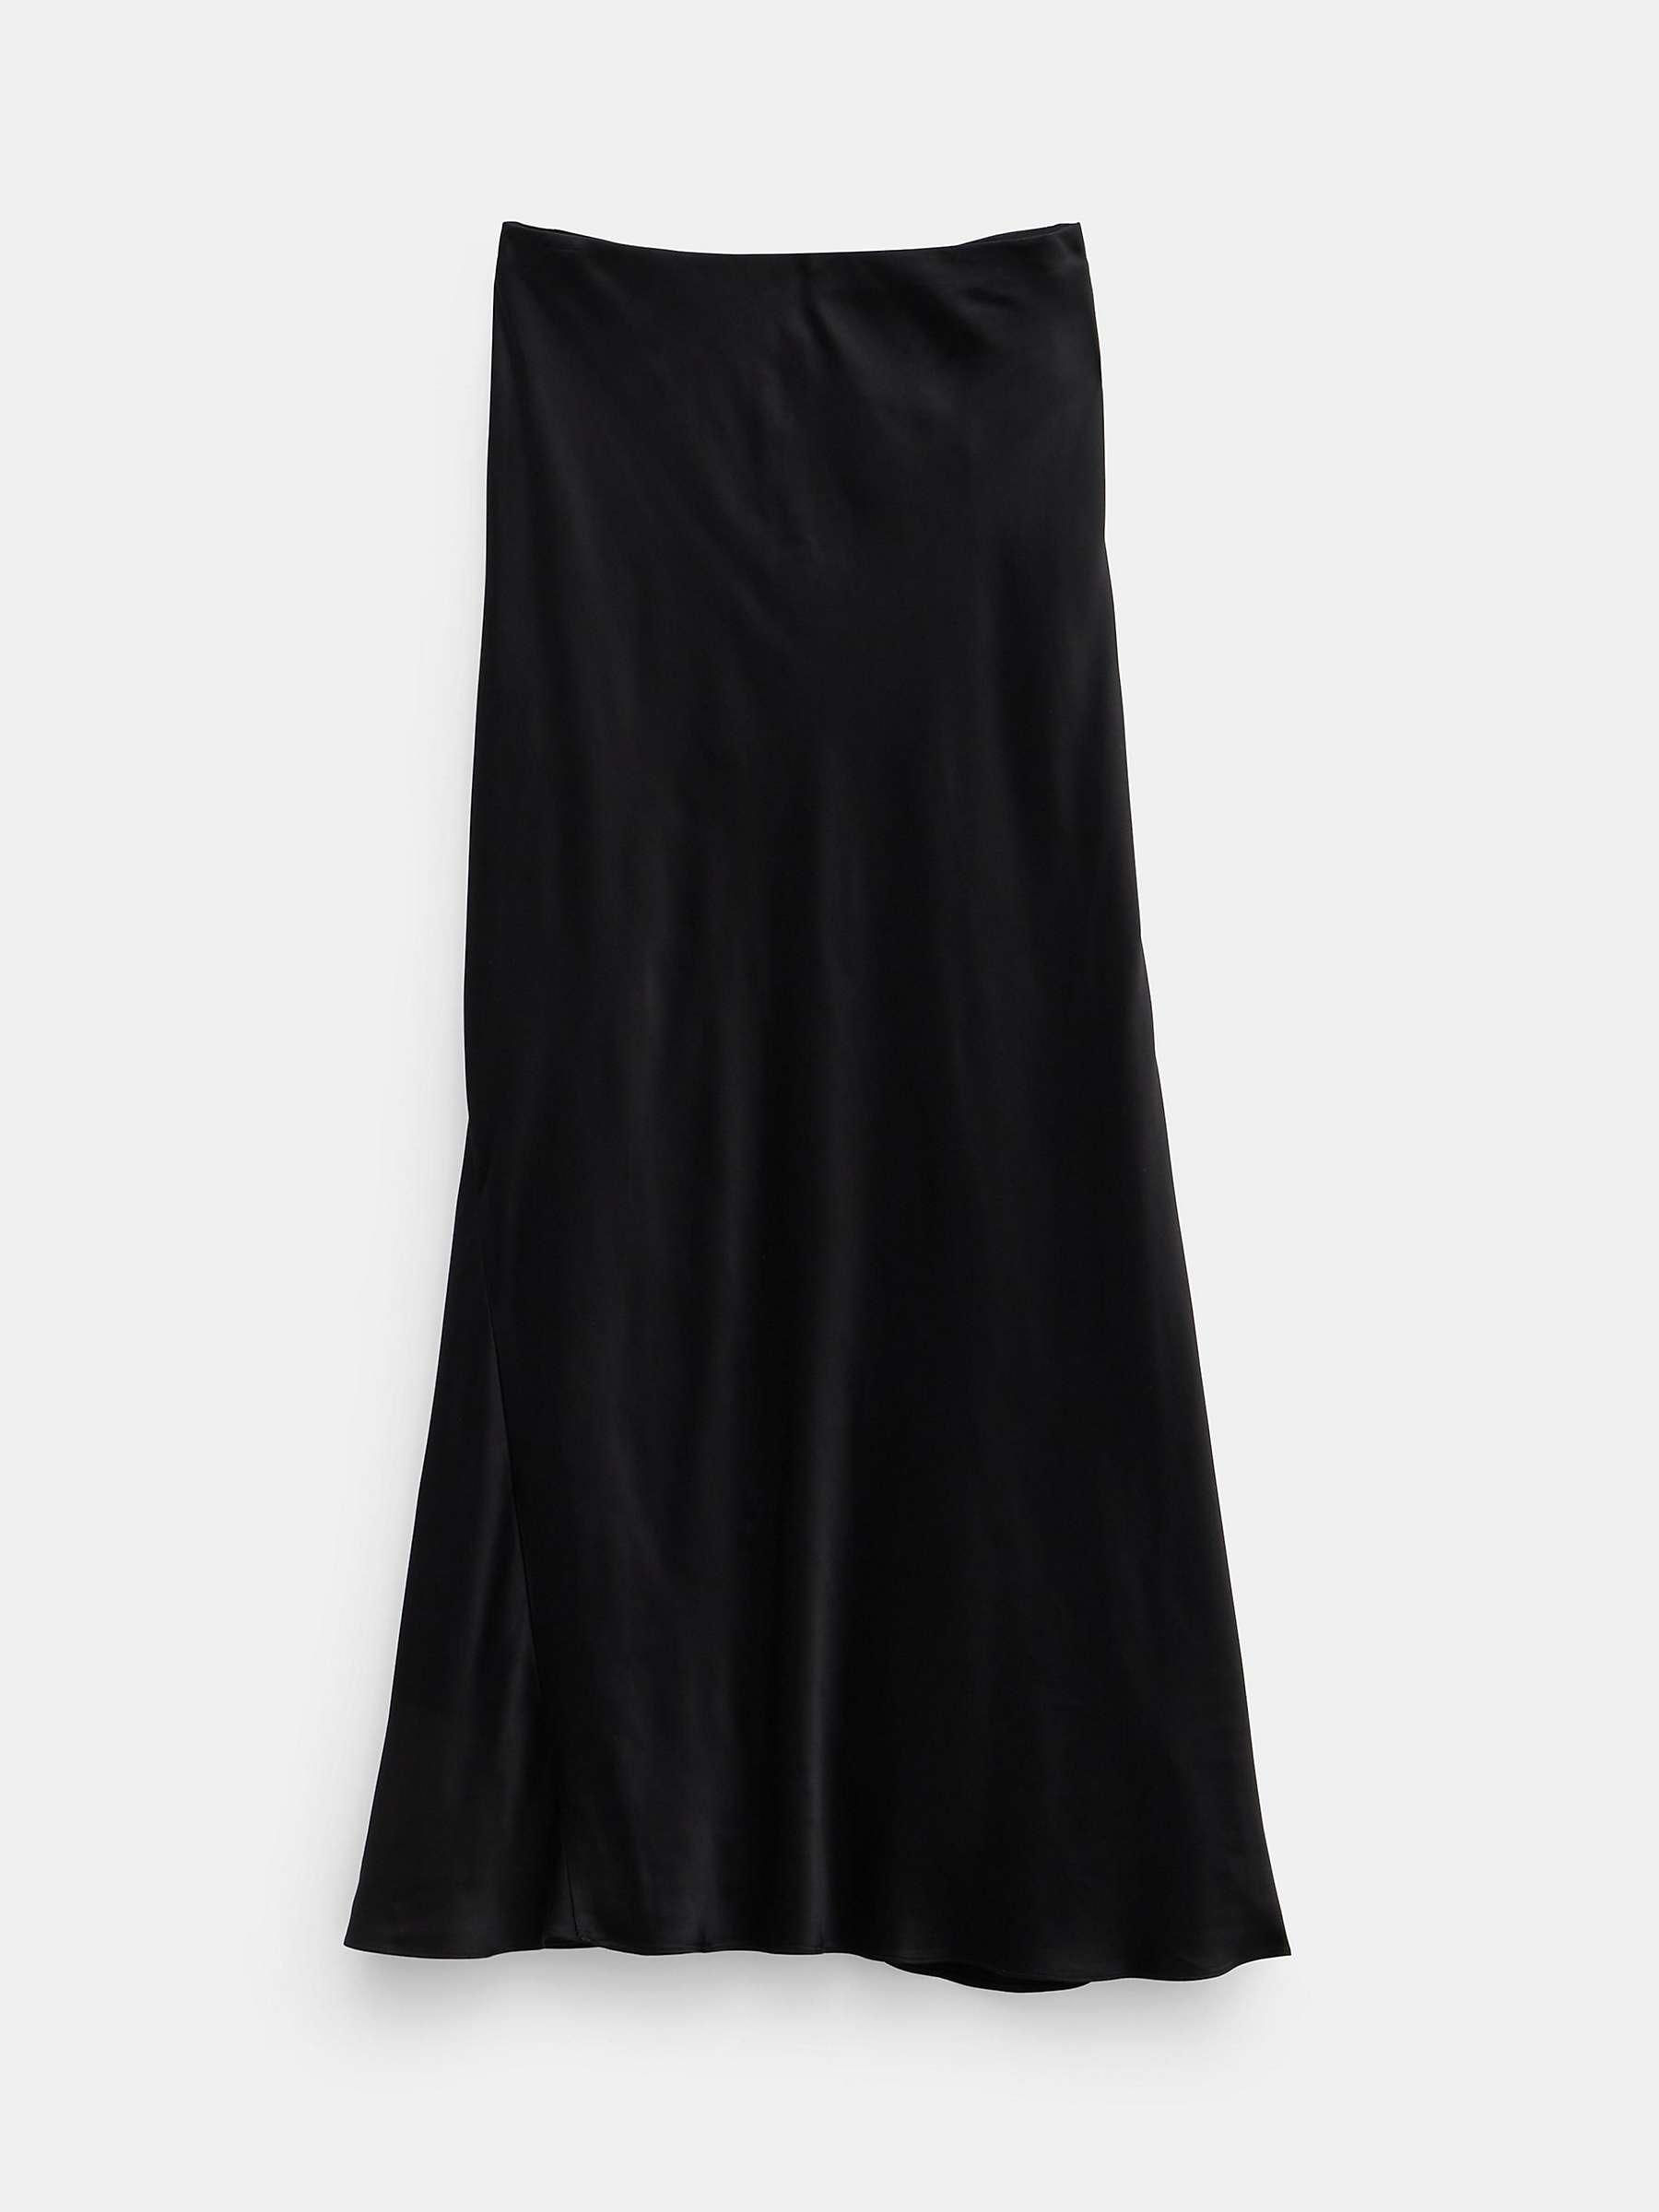 Buy HUSH Remi Satin Maxi Skirt, Black Online at johnlewis.com